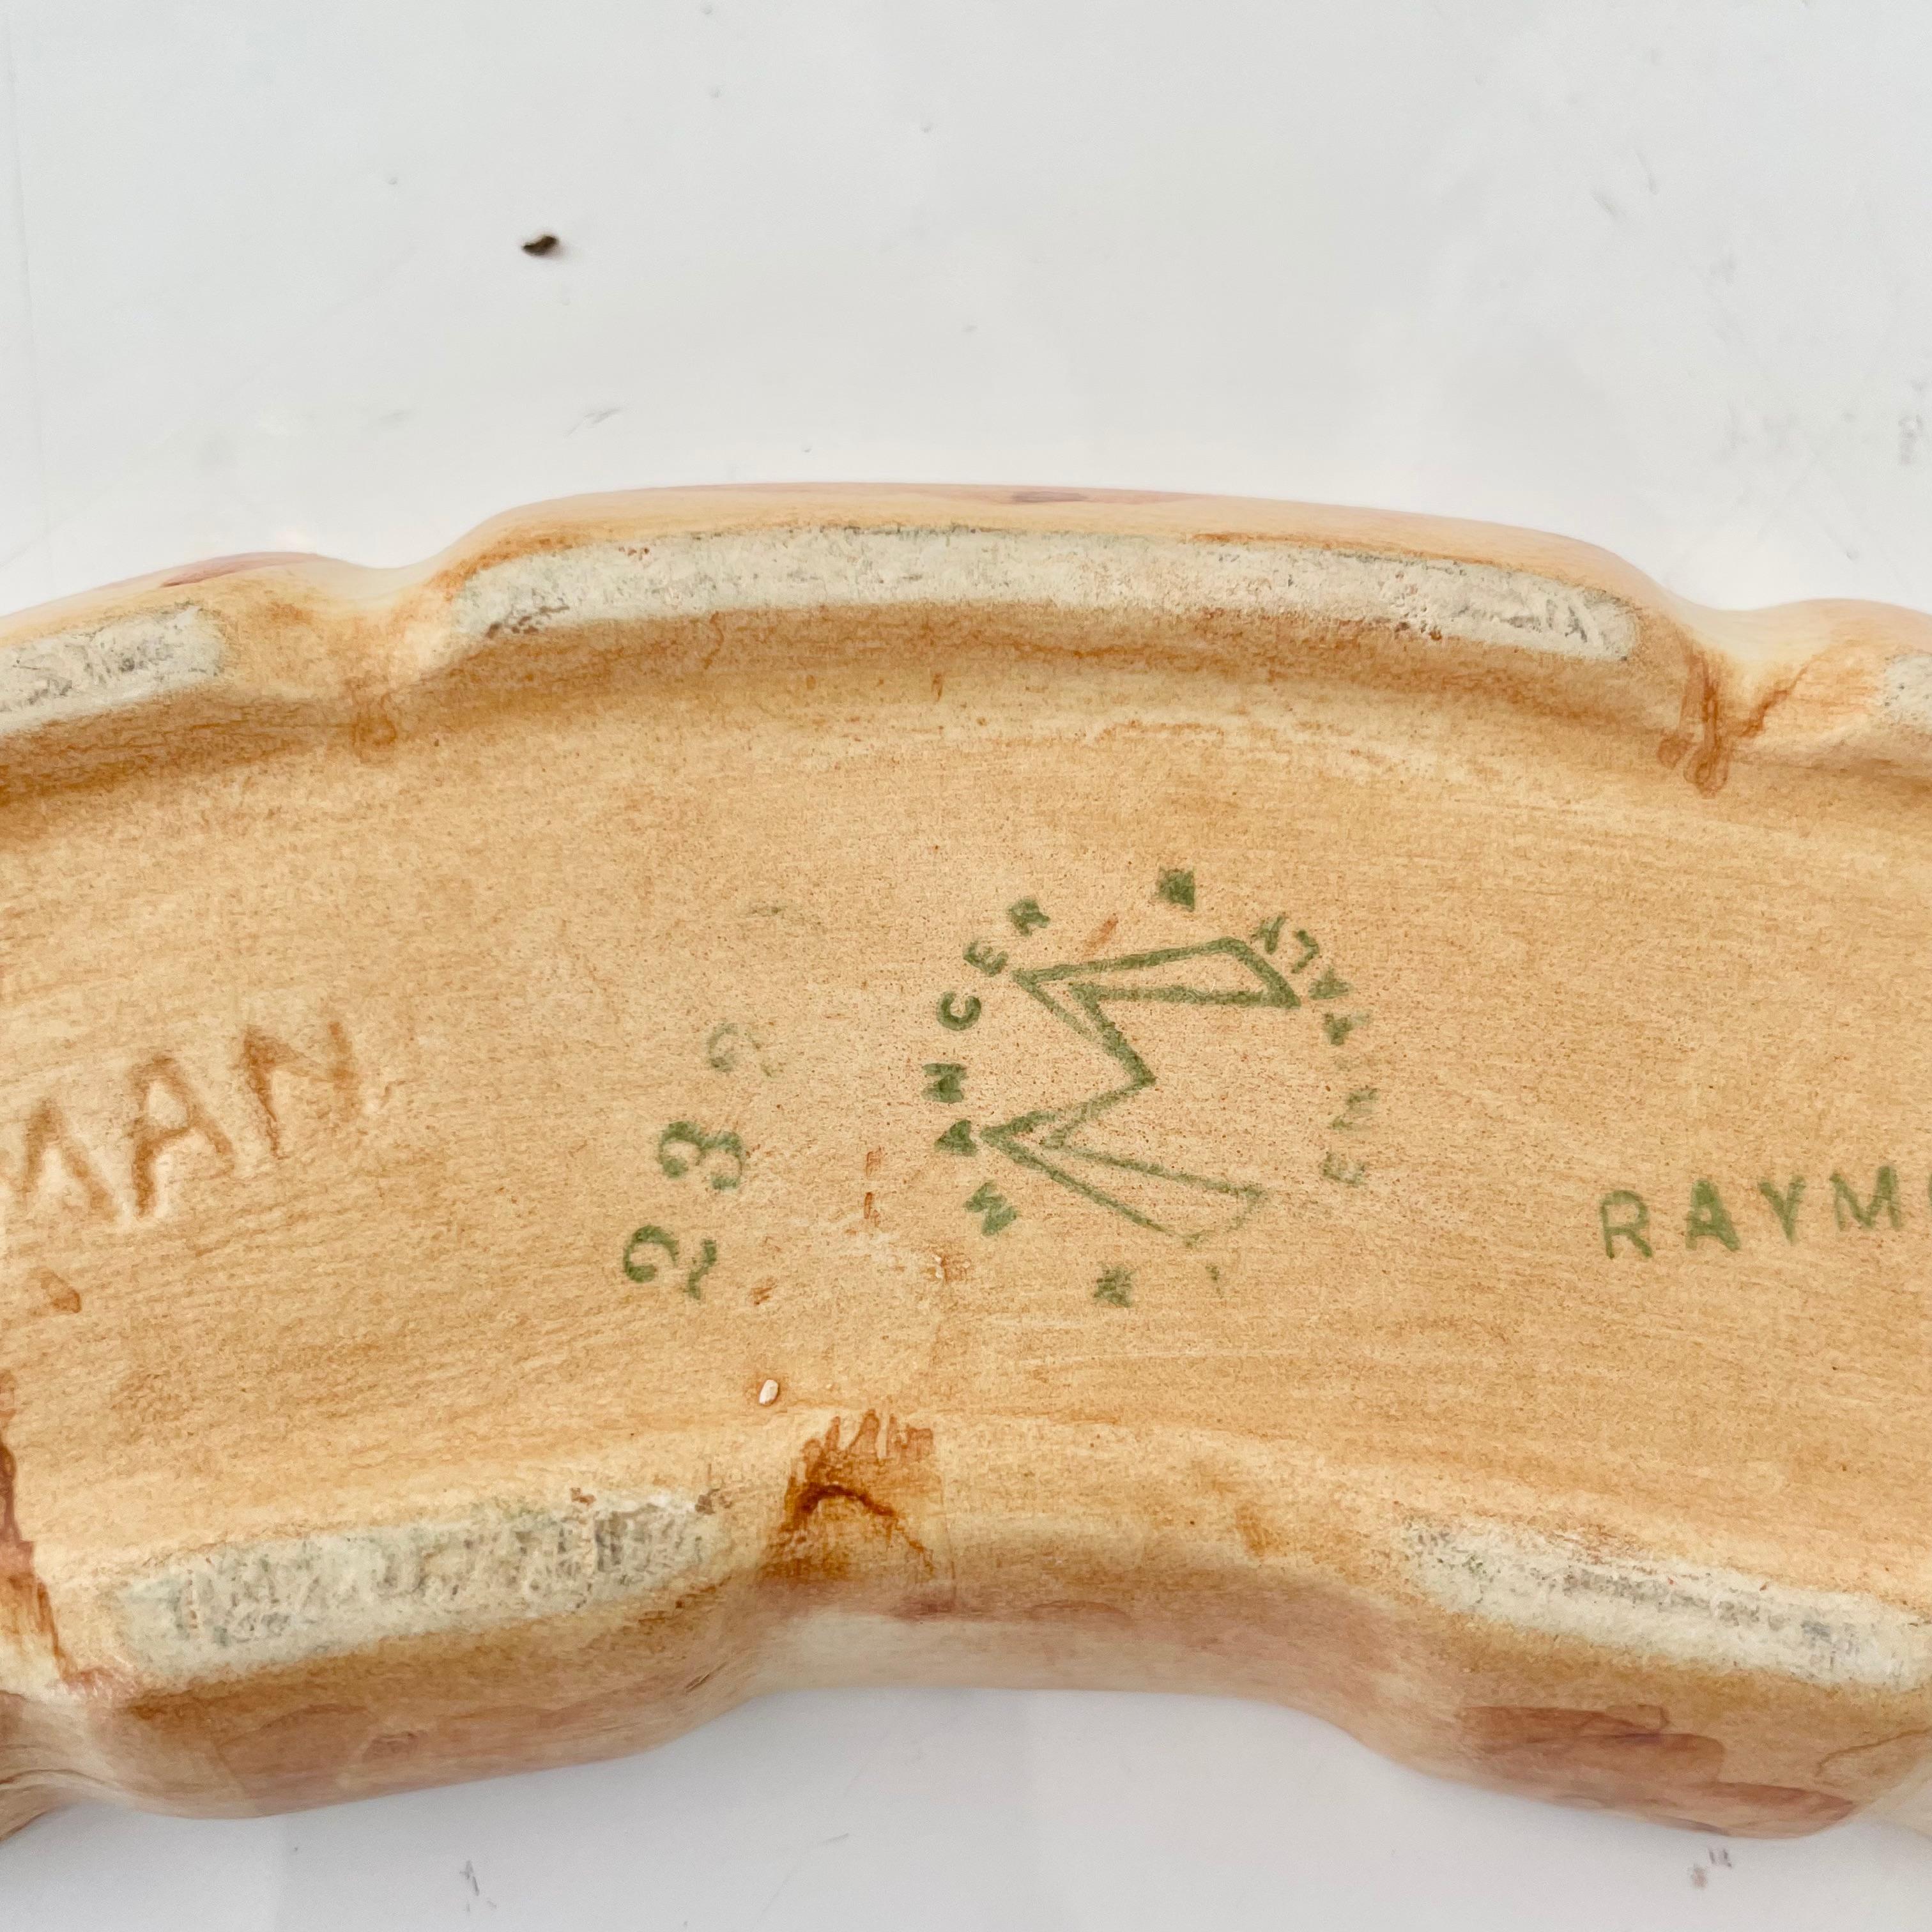 Ceramic Croissant Box by Raymor 2